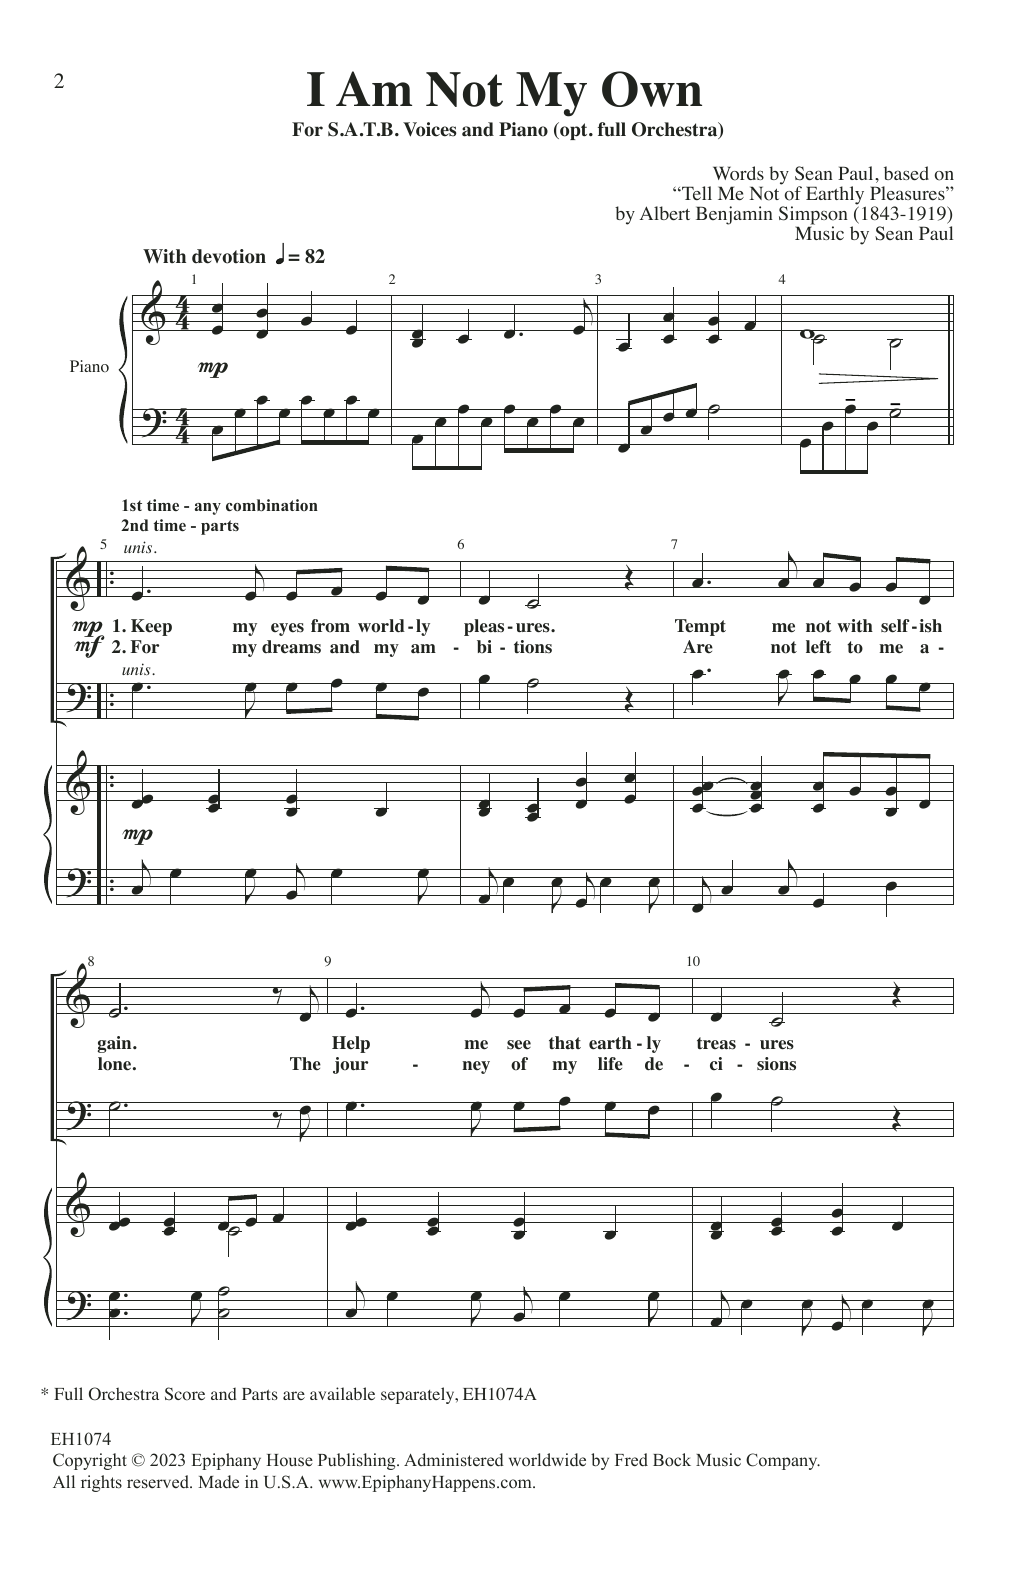 Sean Paul I Am Not My Own Sheet Music Notes & Chords for SATB Choir - Download or Print PDF